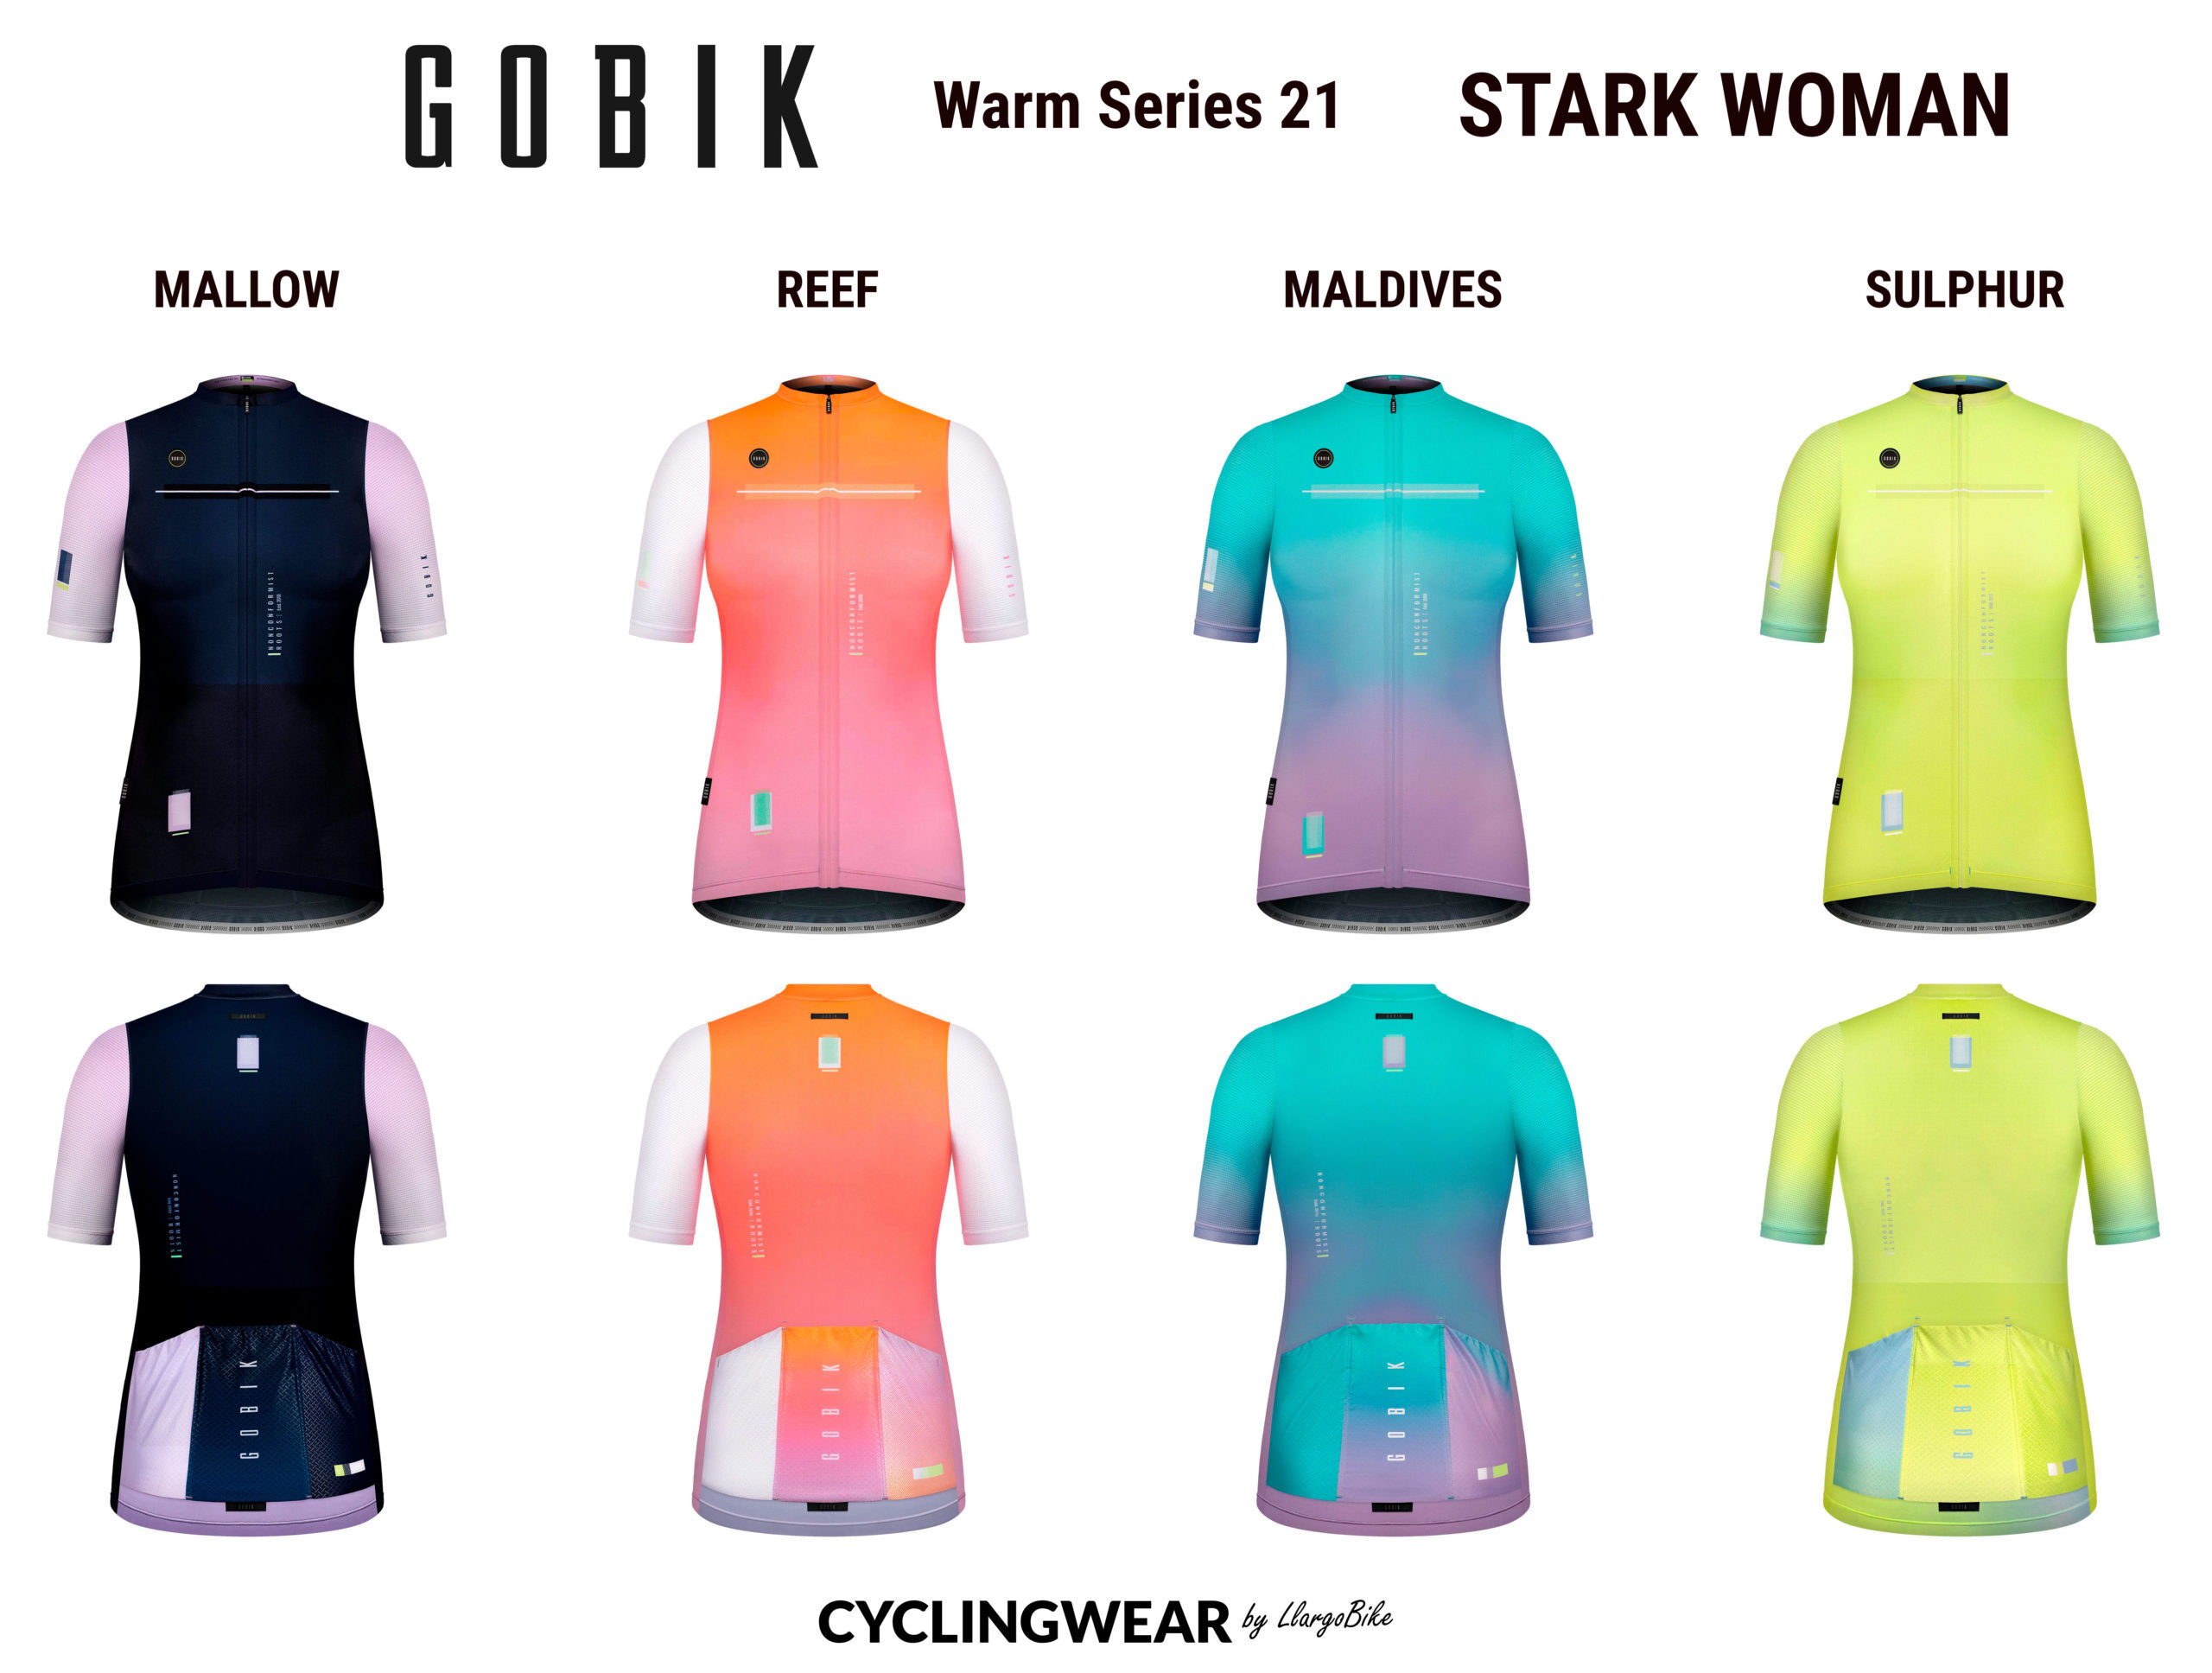 warm-series-21-gobik-maillot-jersey-stark-woman-cyclingwear-by-llargobike-v01